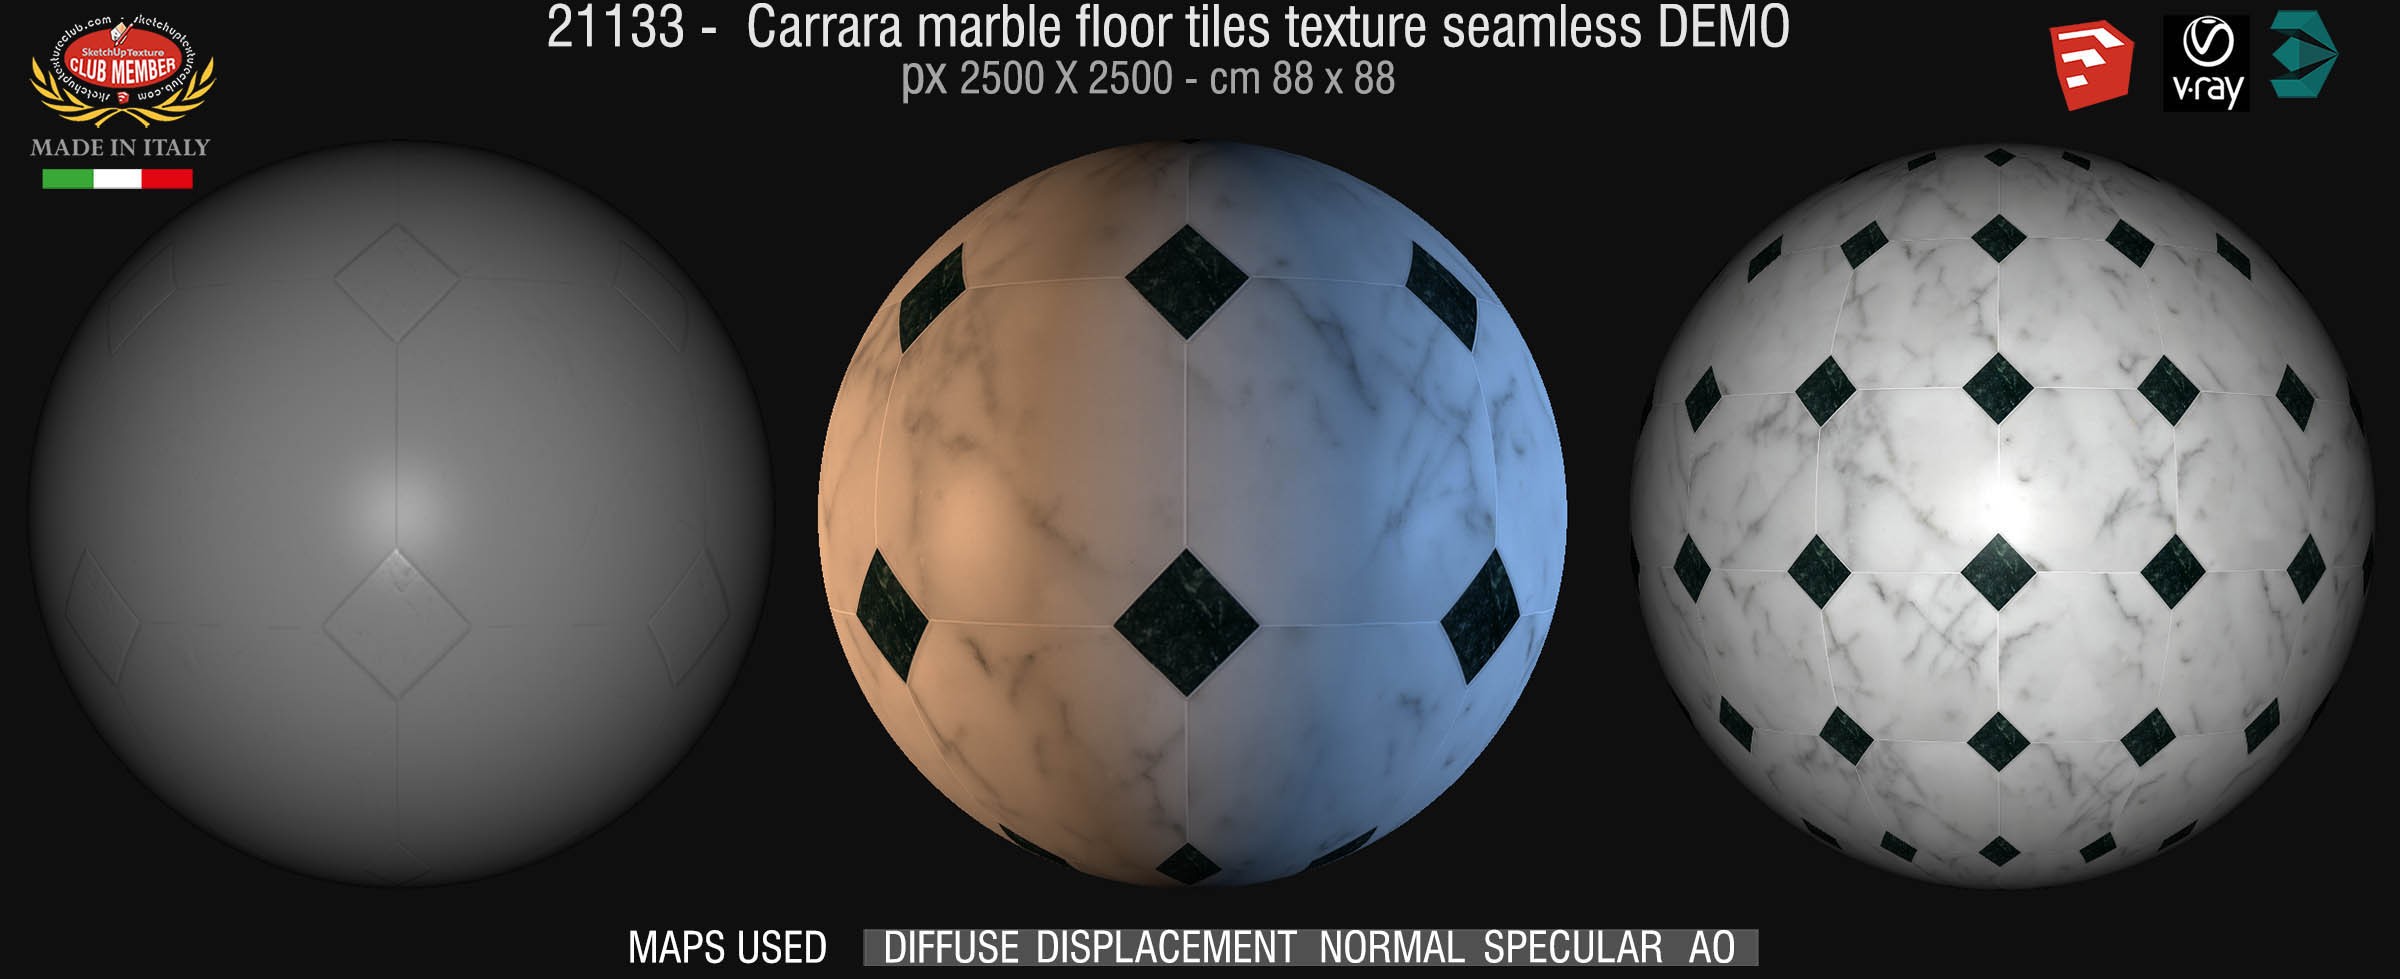 21133 Carrara marble floor tile texture seamless + maps DEMO